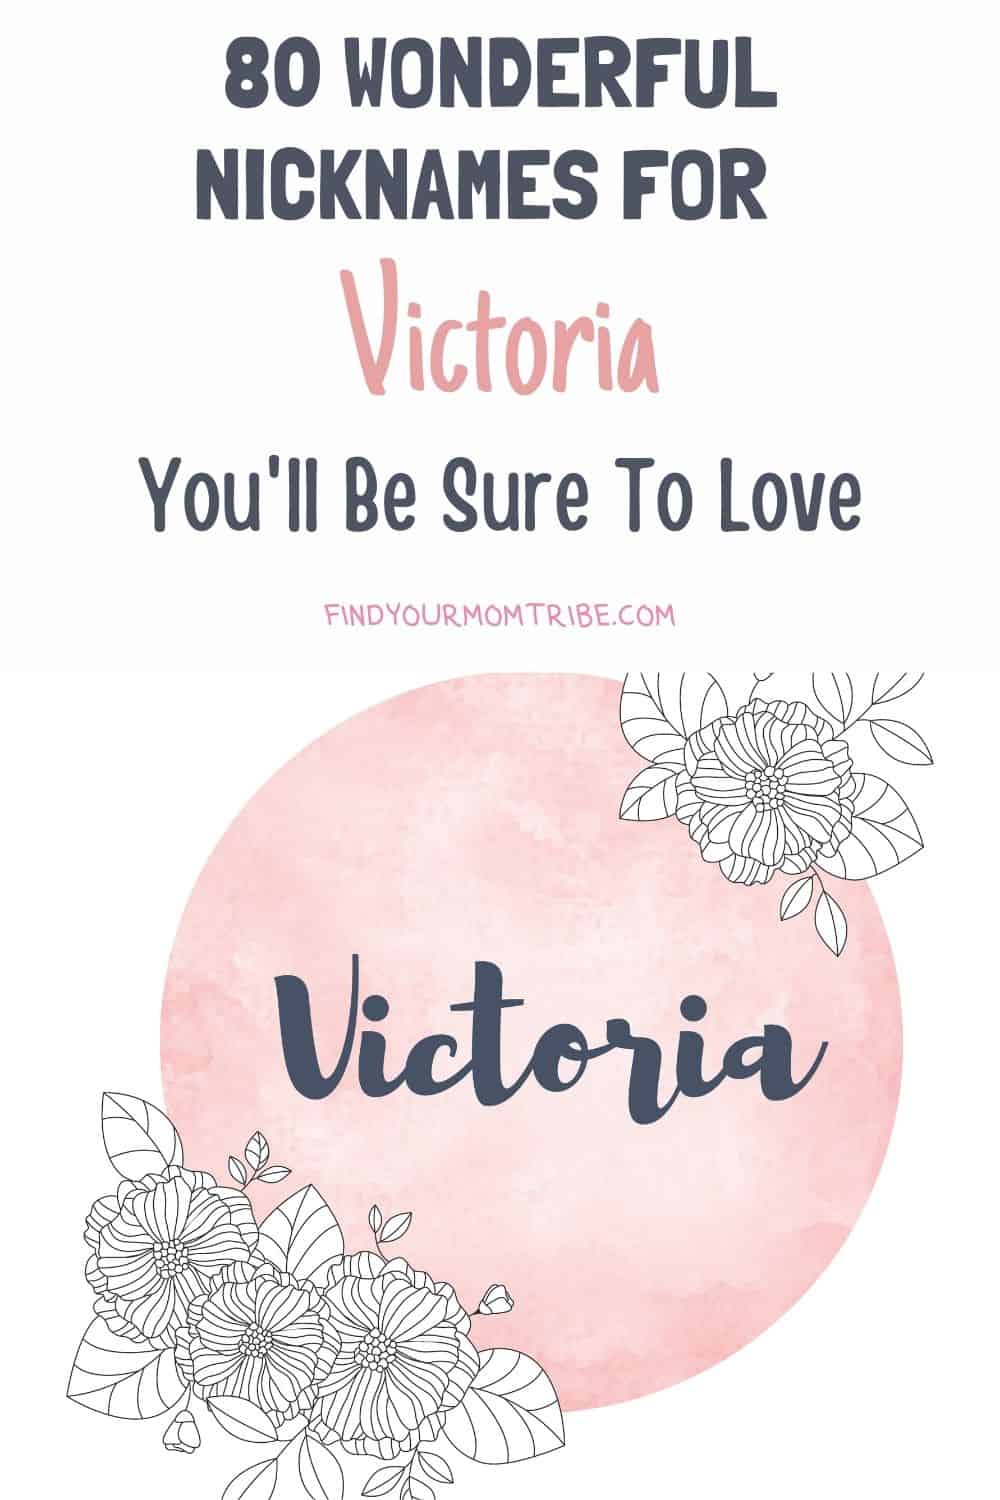 Pinterest nicknames for victoria 